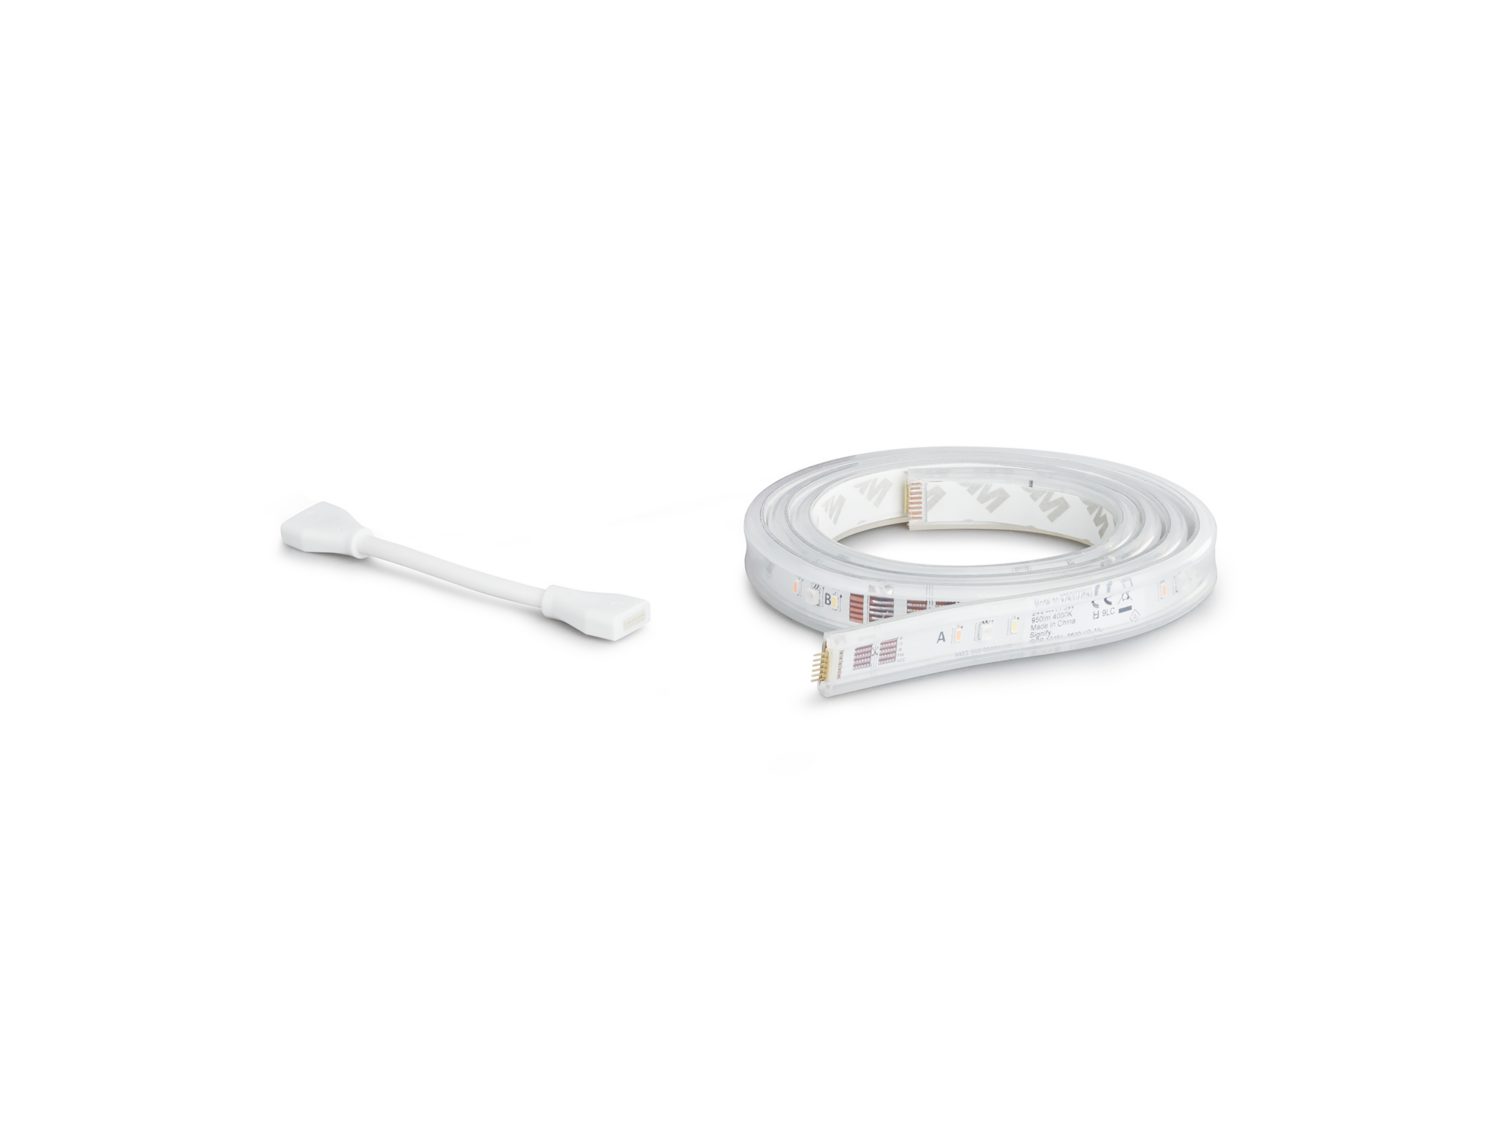 Buy Philips Hue Ledstrip Plus, white and colored light, V4 Base Kit 2m